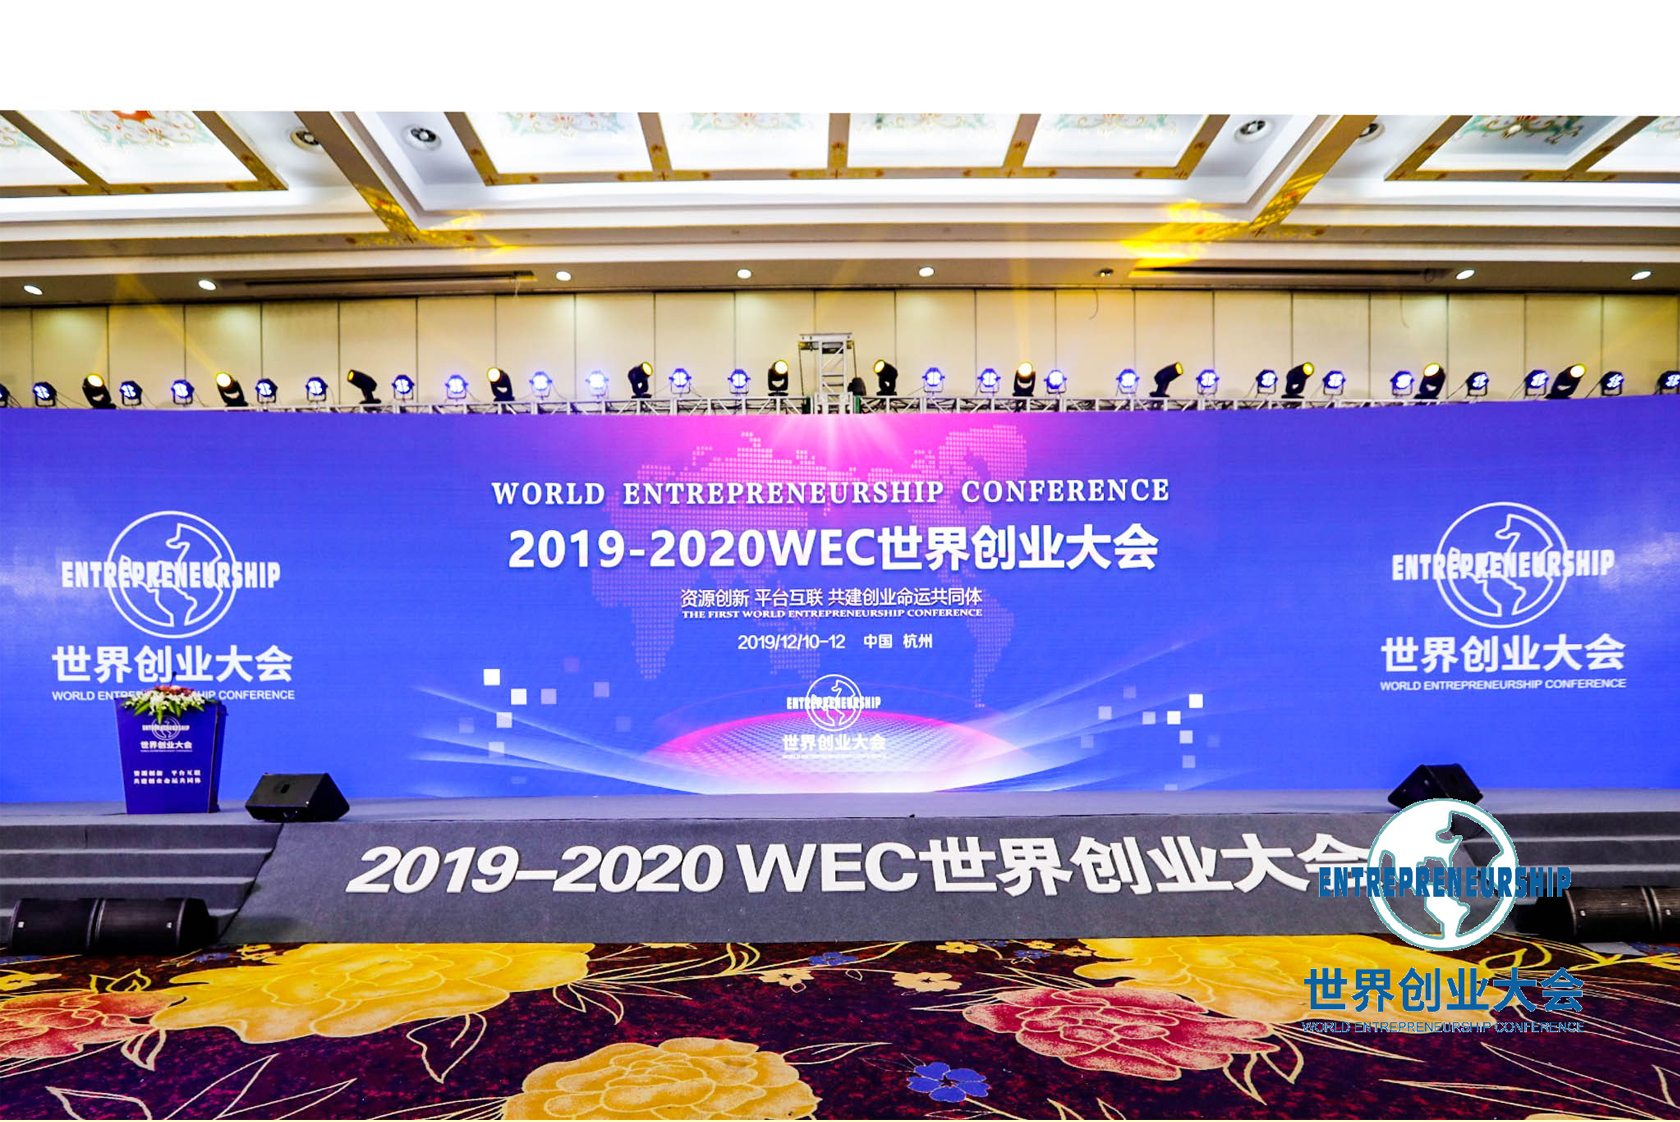 2019-2020 WEC世界创业大会-5